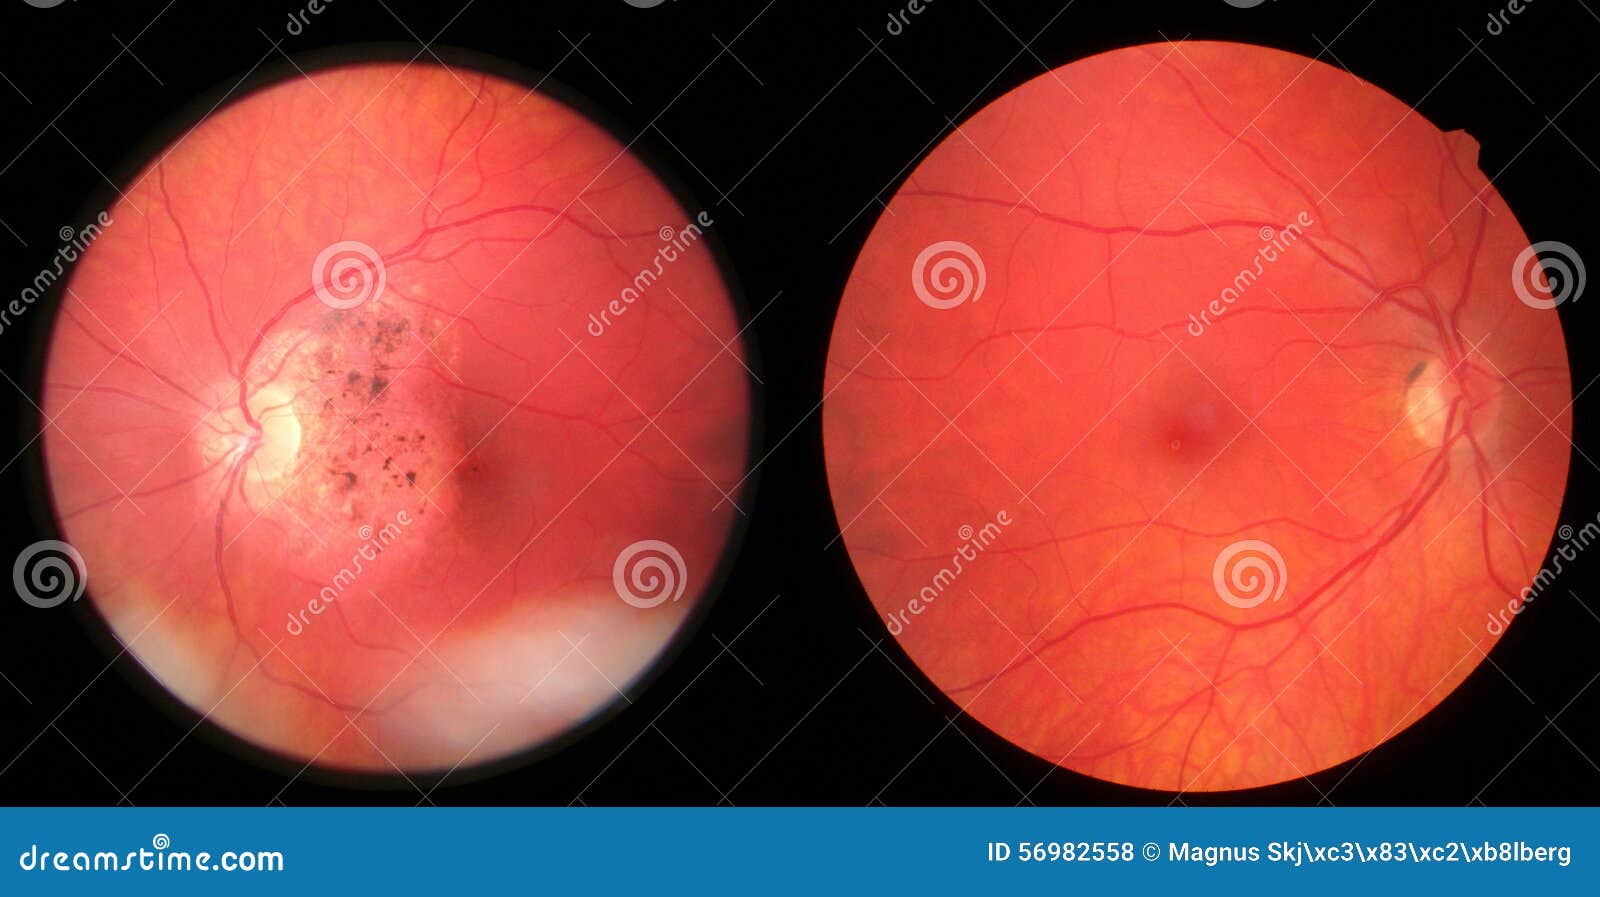 retina - damaged and healthy